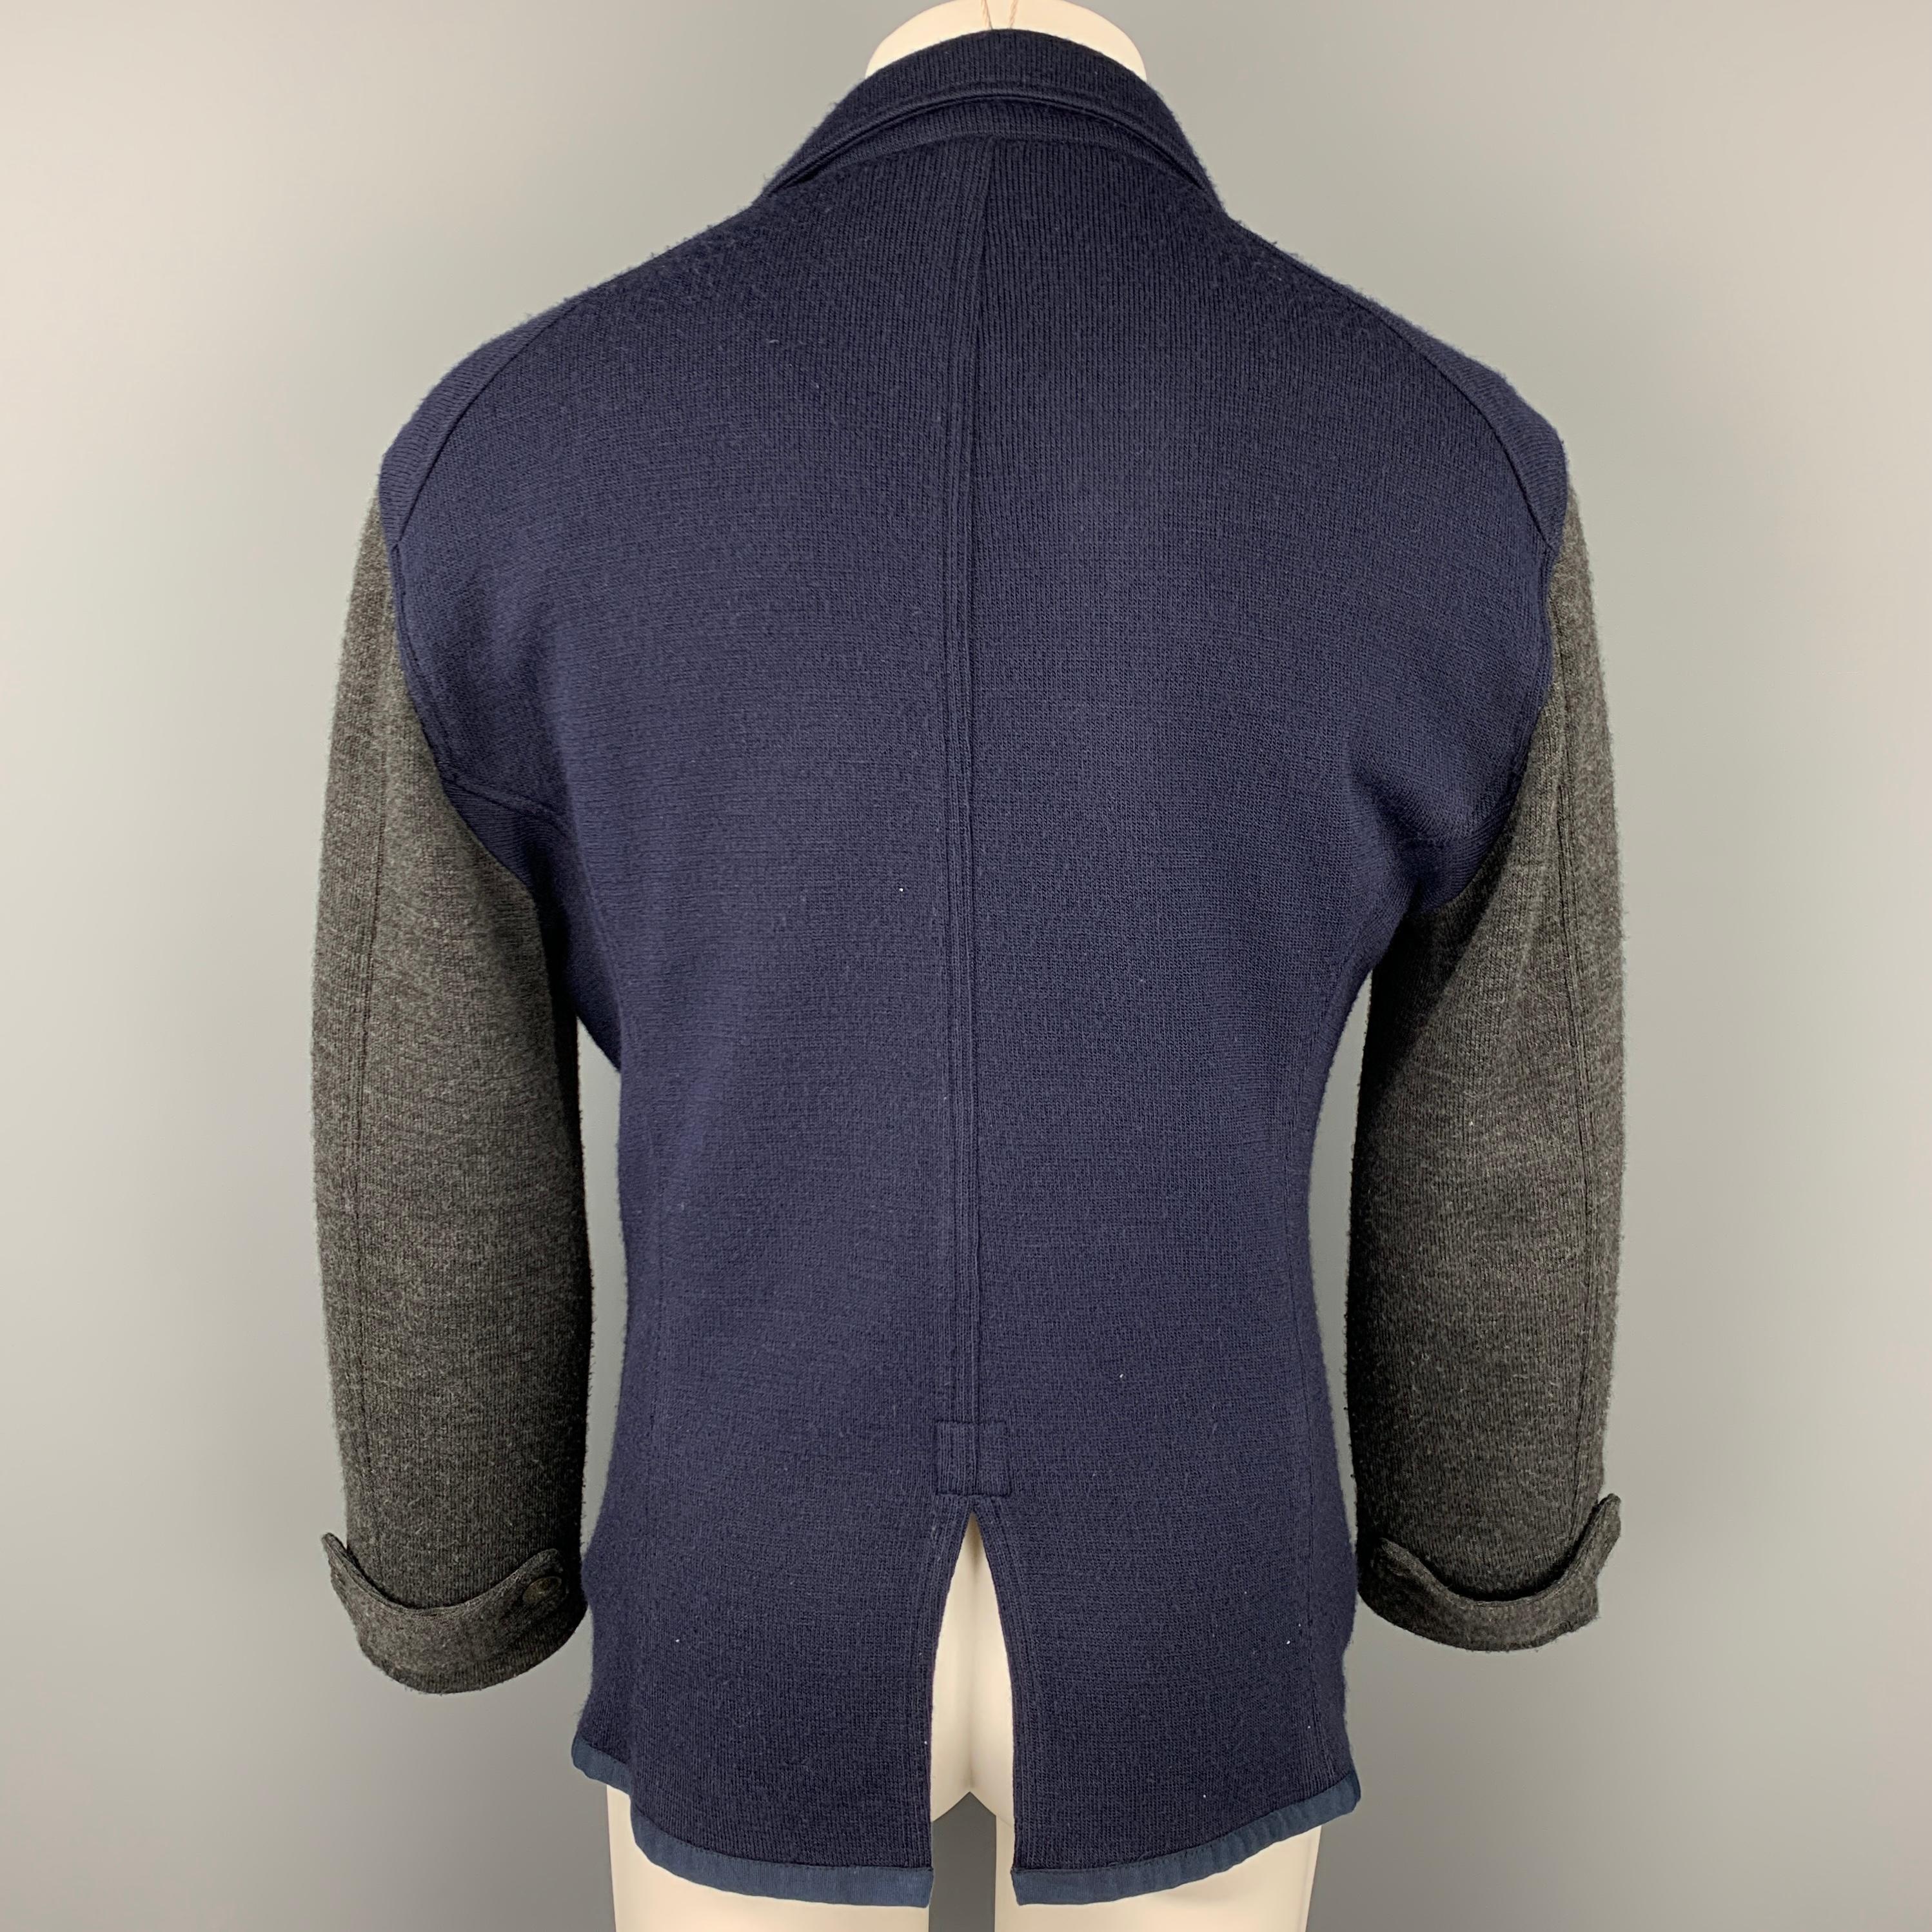 Black JUST CAVALLI Size L Navy & Grey Color Block Knit Jacket